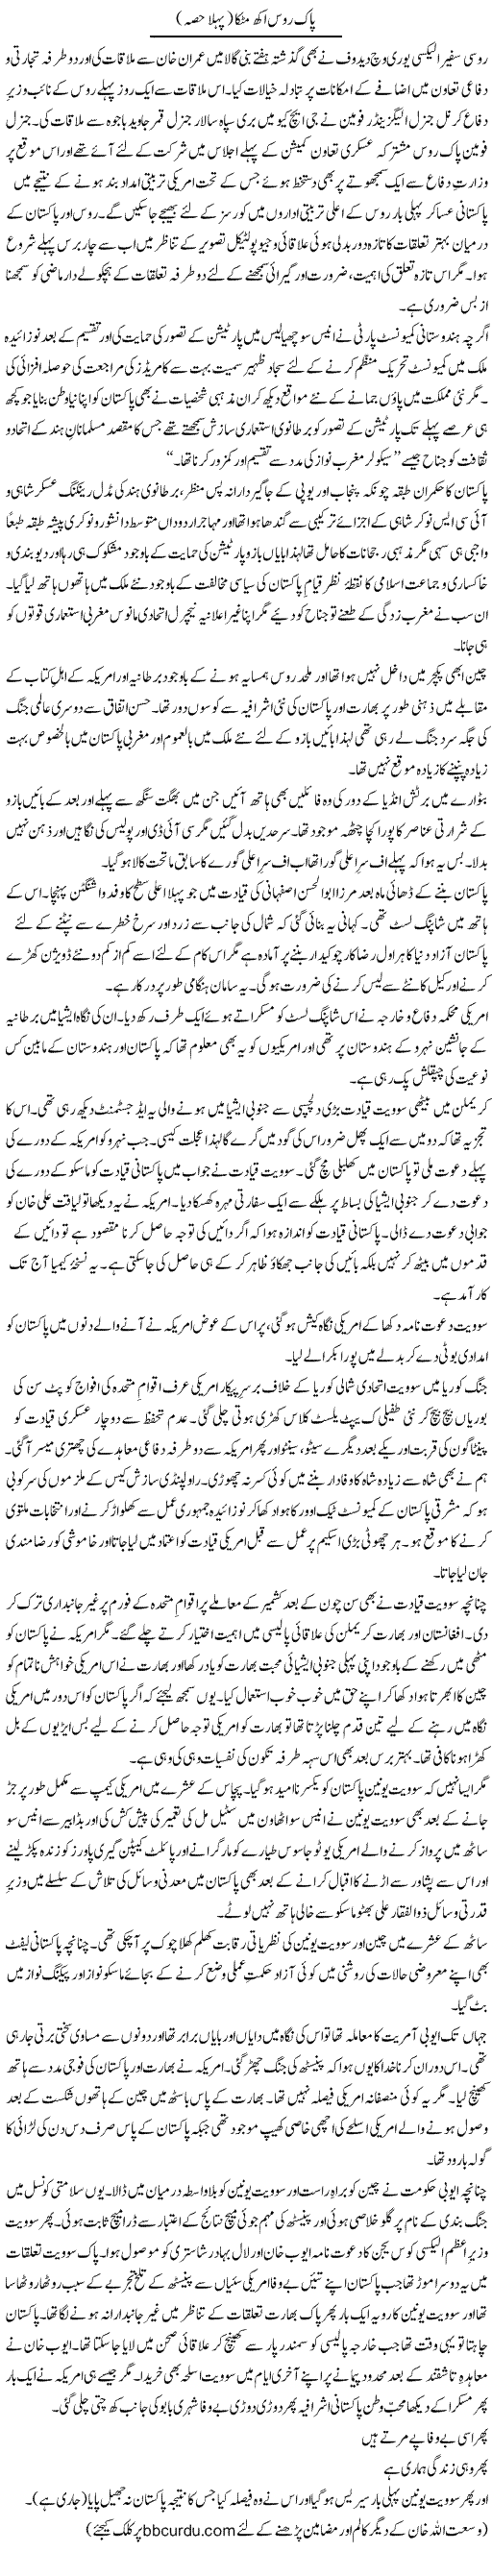 Pak Roos Akh Matakka (1) | Wusat Ullah Khan | Daily Urdu Columns